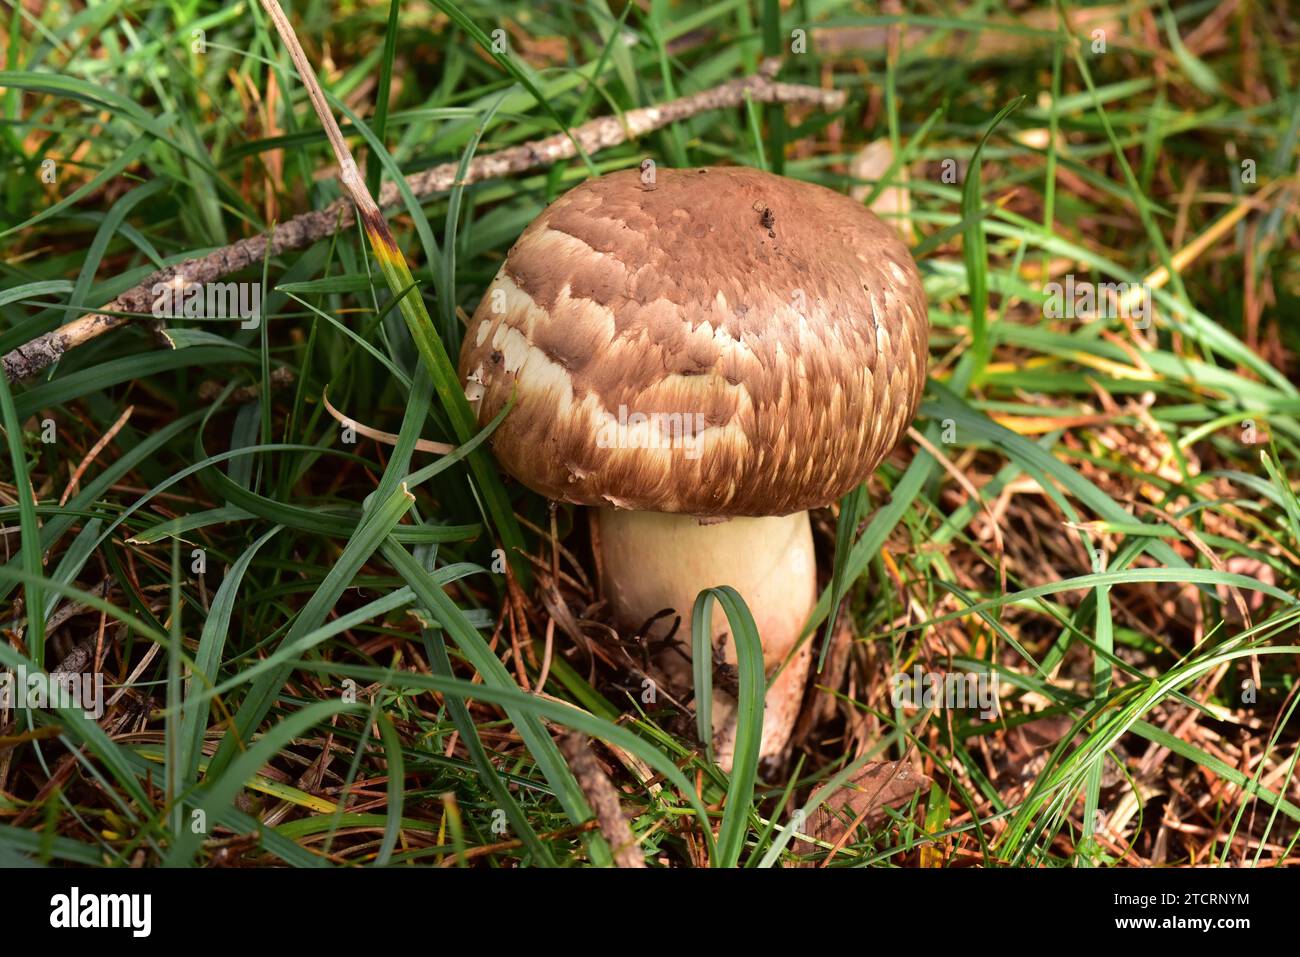 Agaricus langei or Psalliota langei is an edible mushroom. This photo was taken in Pla de Busa, Lleida province, Catalonia, Spain. Stock Photo